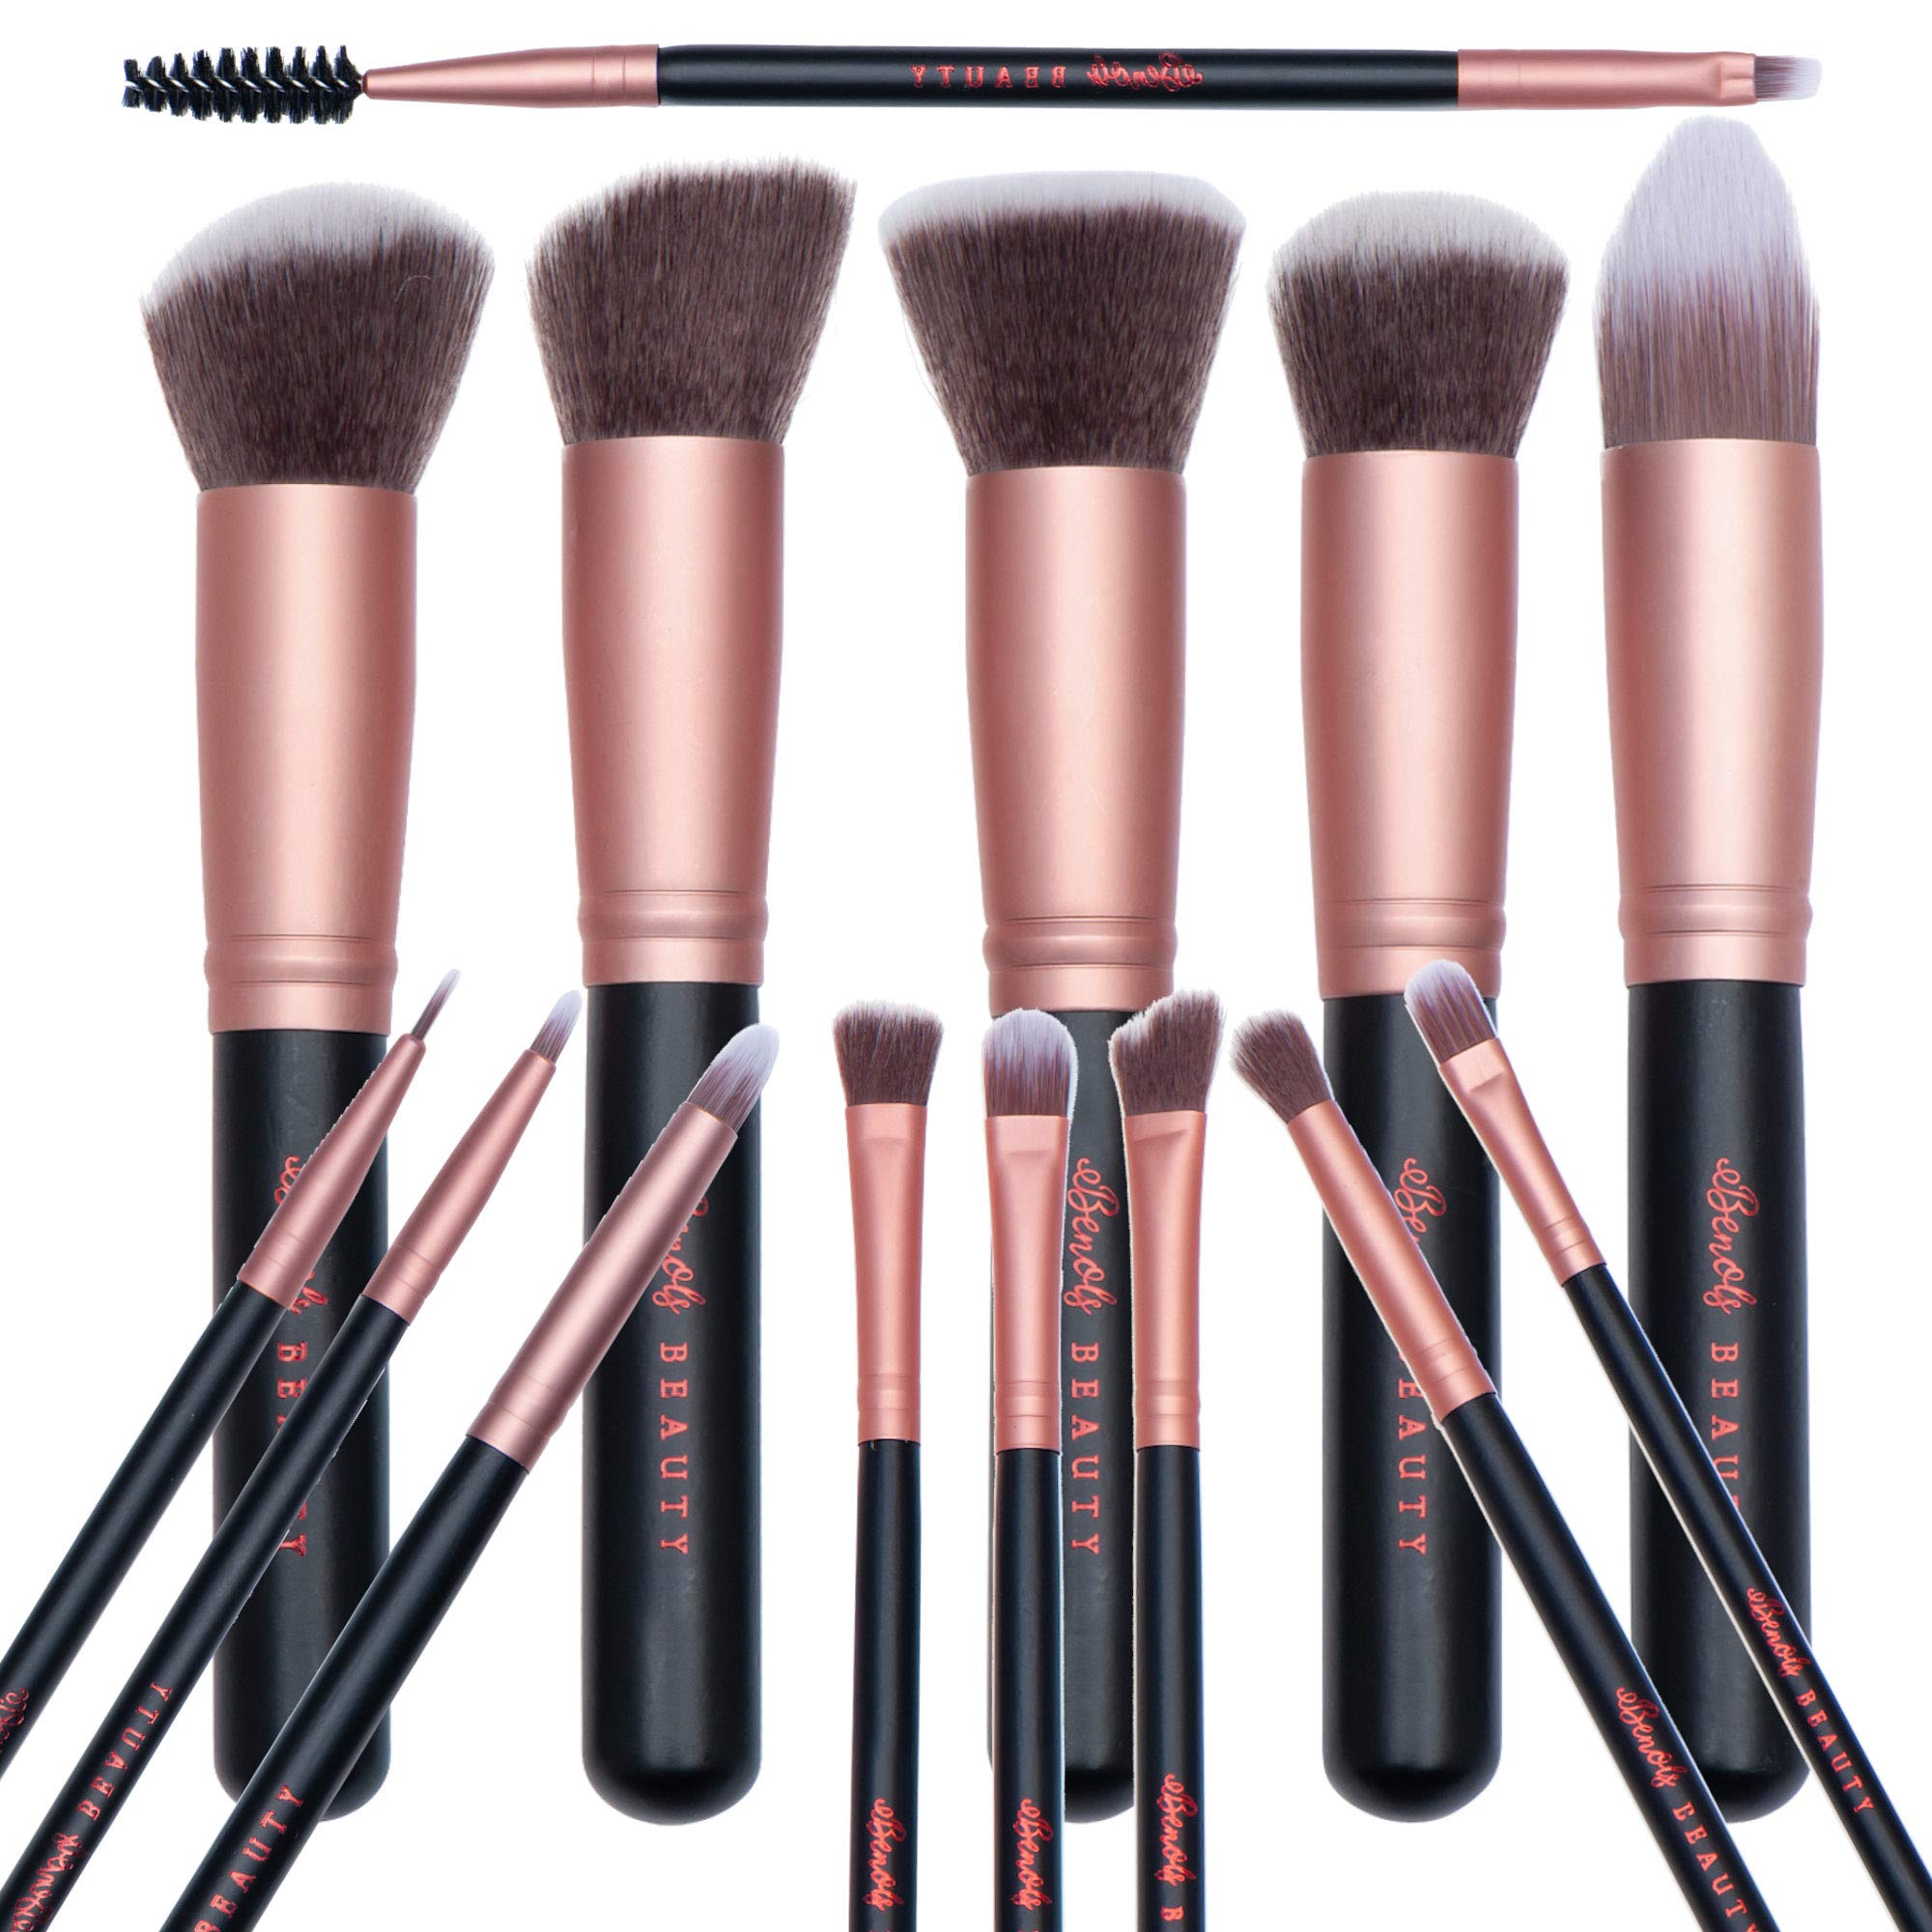 Benols Beauty (TM) 14pcs Makeup Brush Set